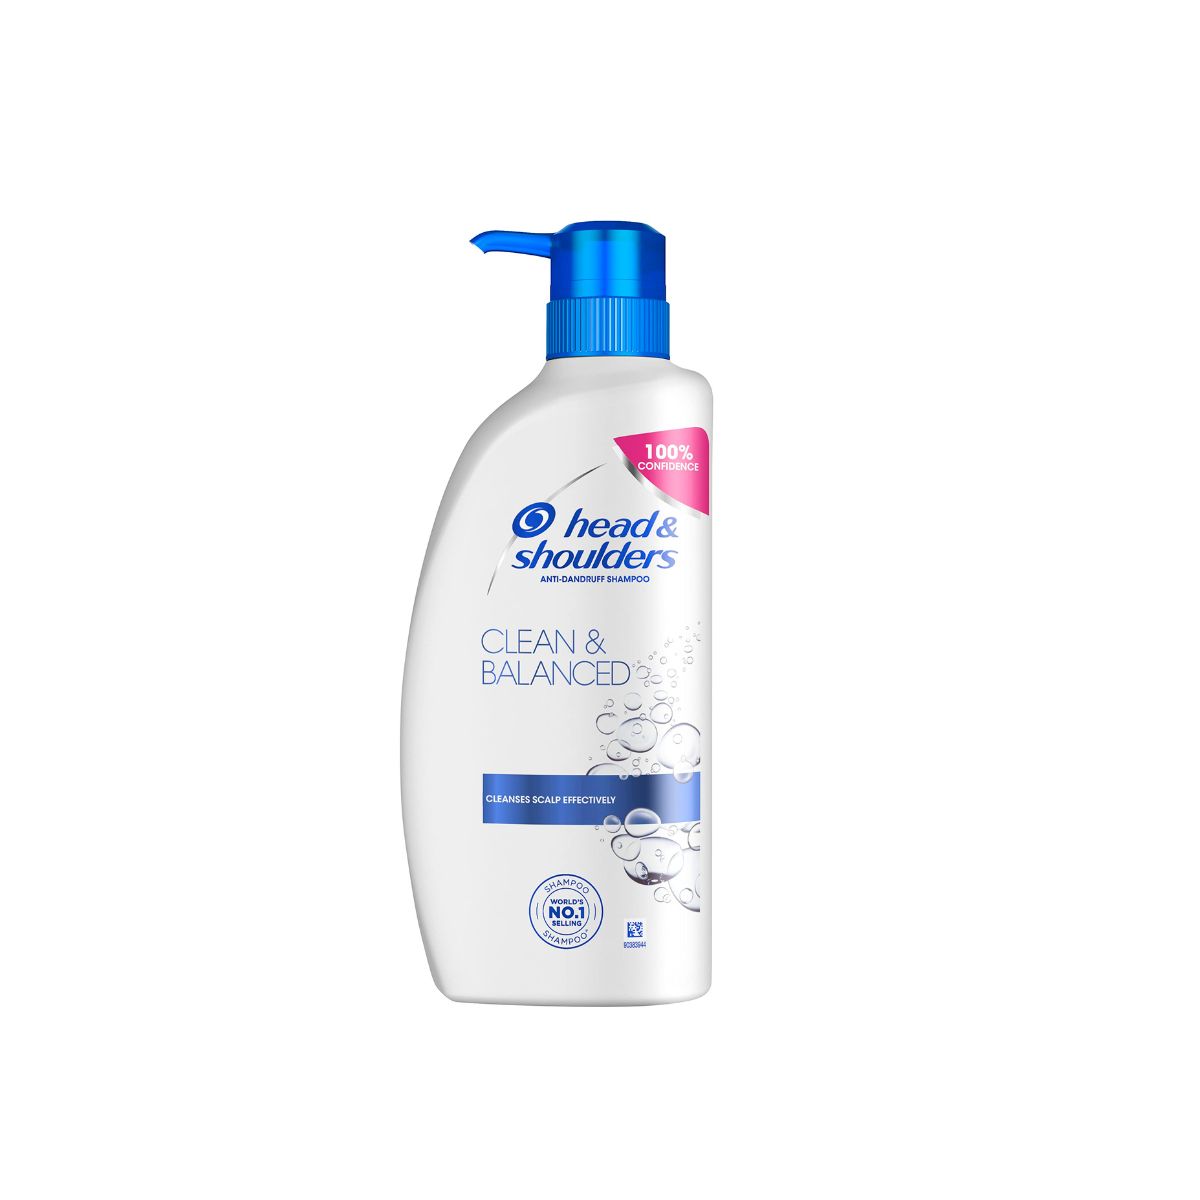 Head & Shoulder Anti Dandruff Shampoo - Clean & Balanced - 410ml